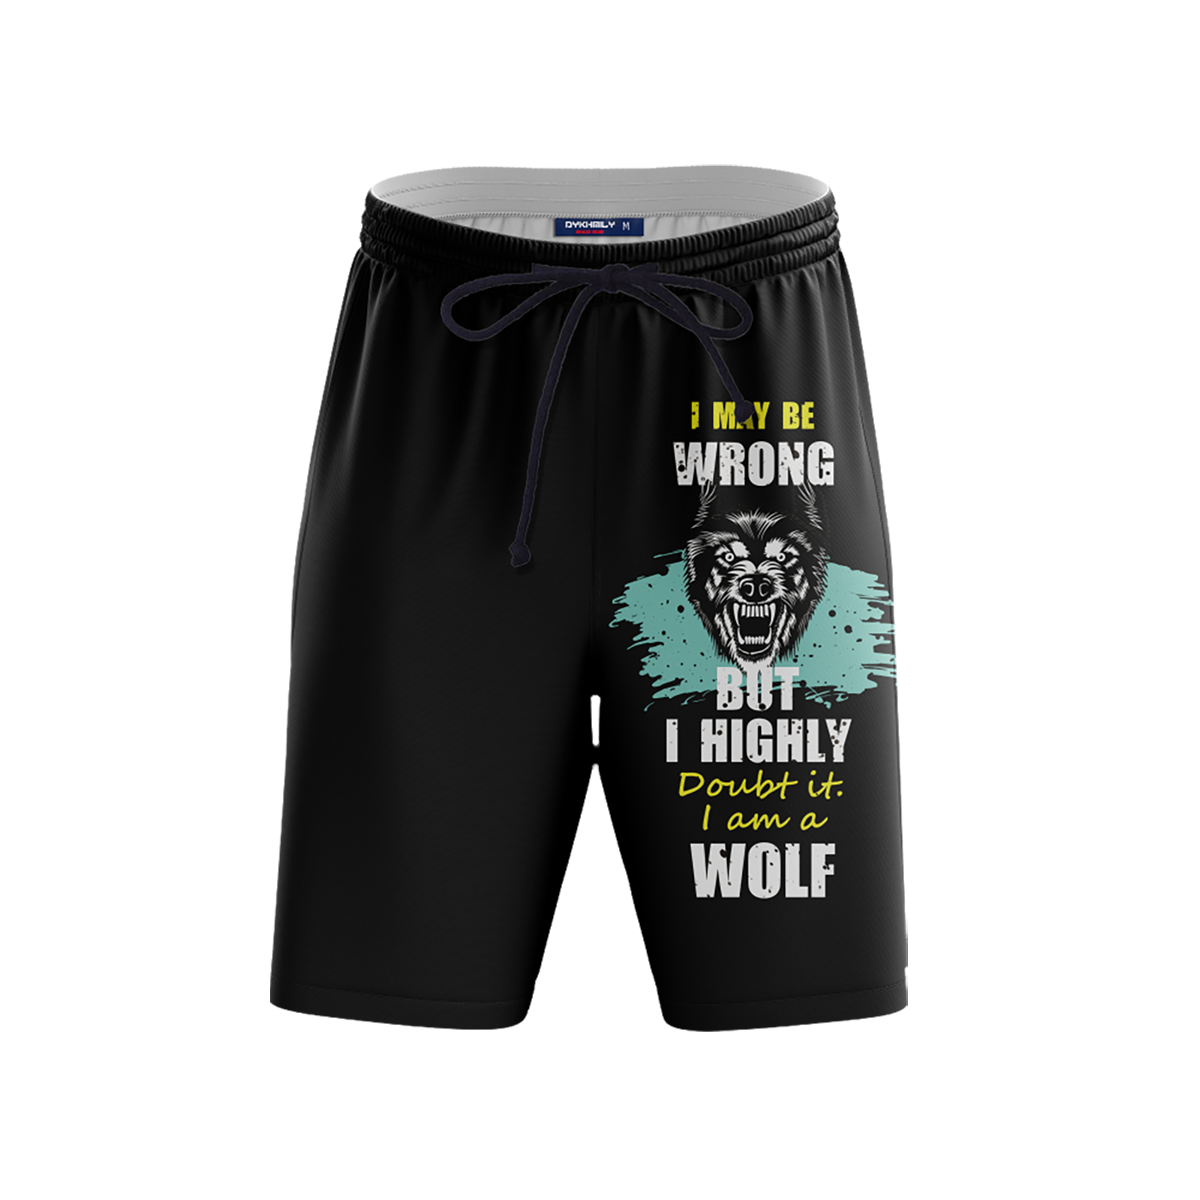 Wolf Wisdom Beach Shorts Short